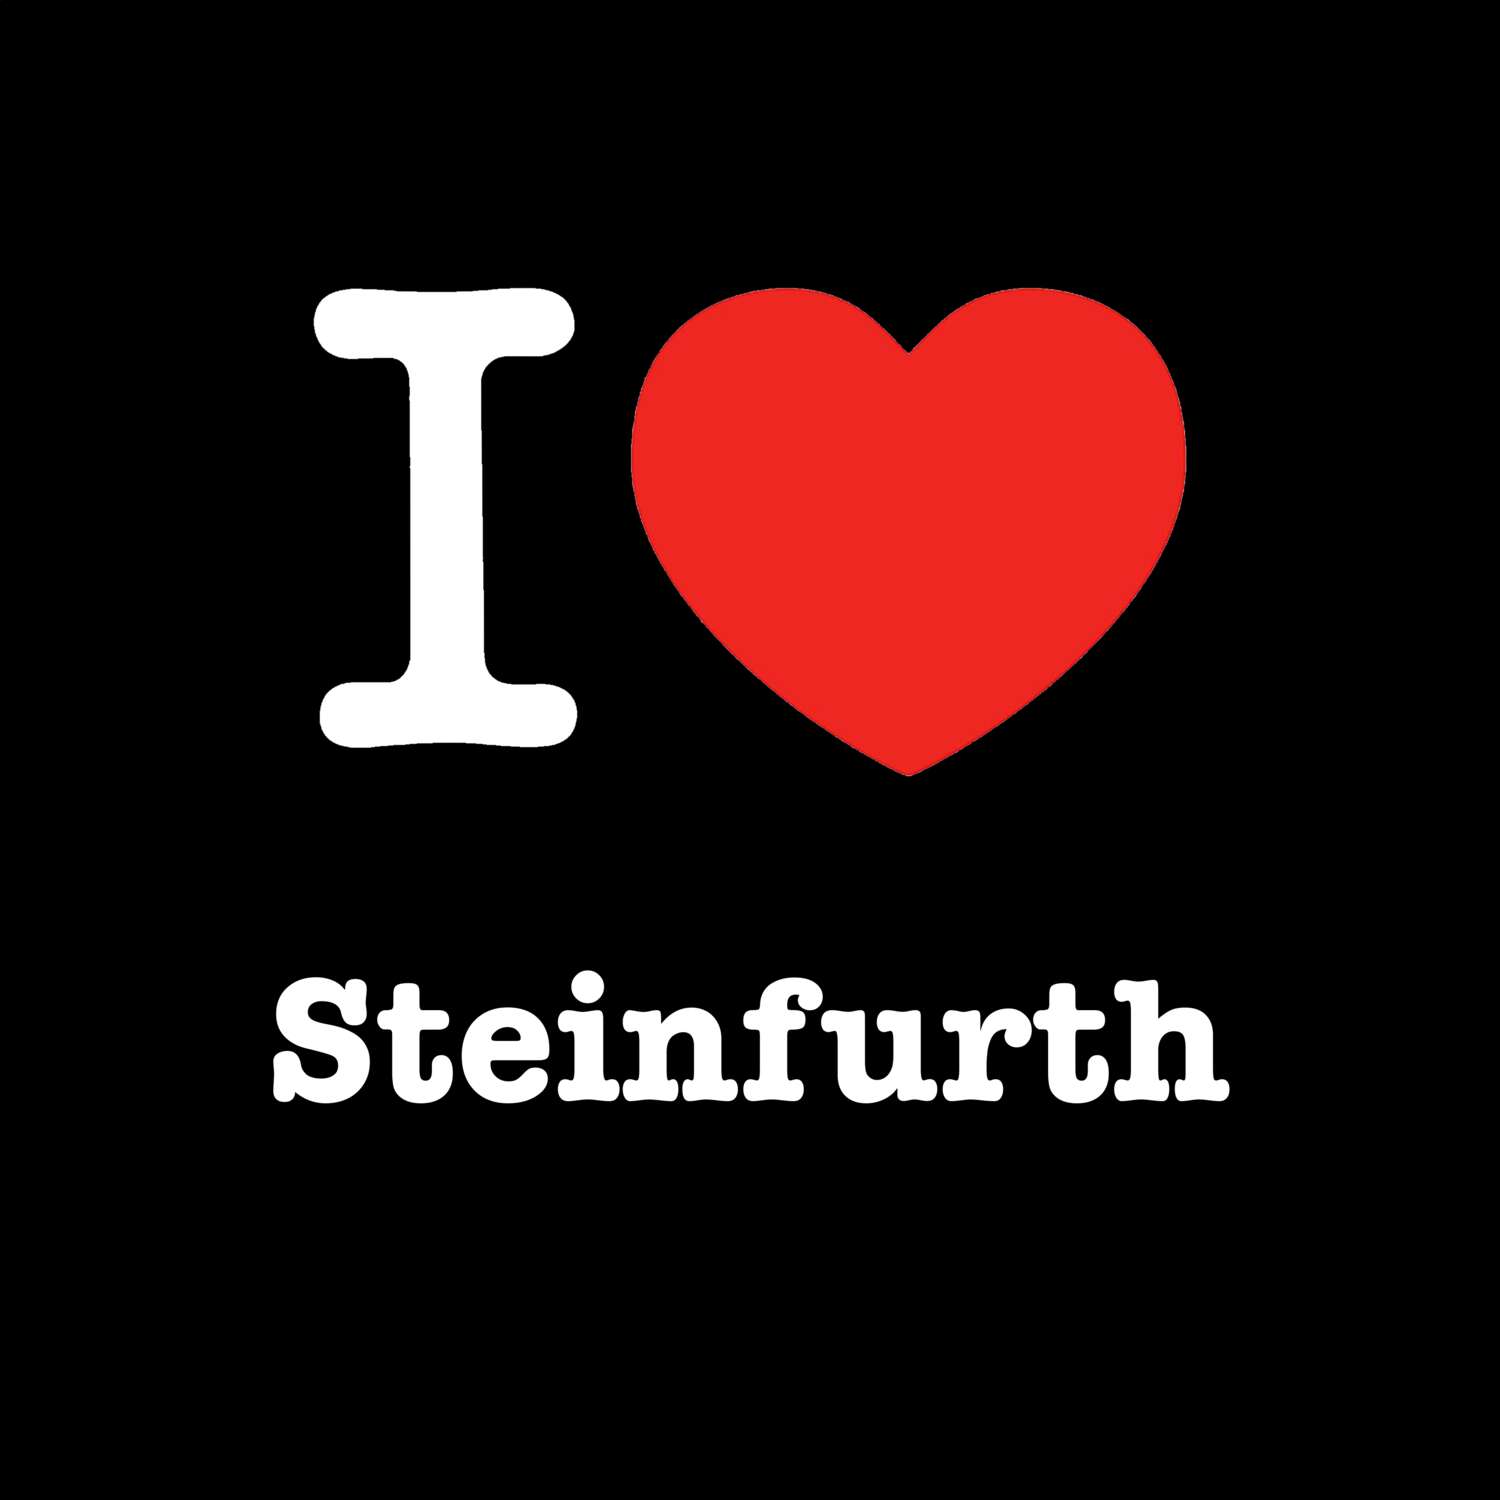 Steinfurth T-Shirt »I love«